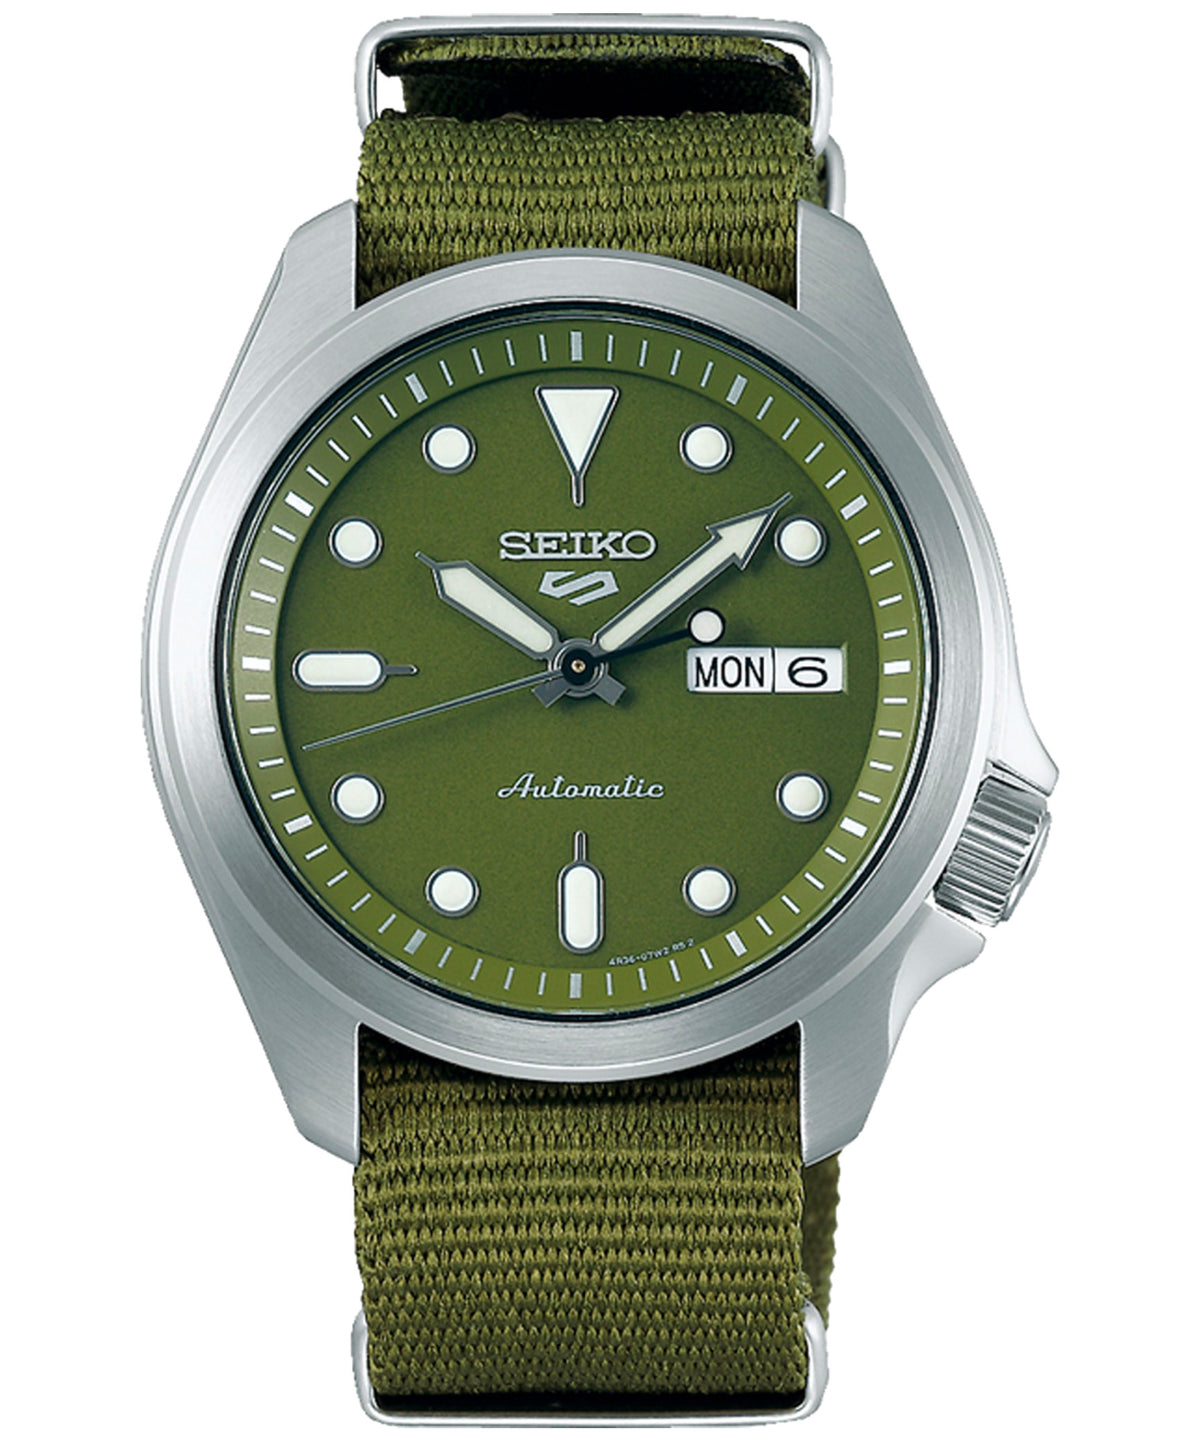 Seiko Men's Sports Mechanical Watch Analog, Green Dial Green Nylon Band, SRPE65K